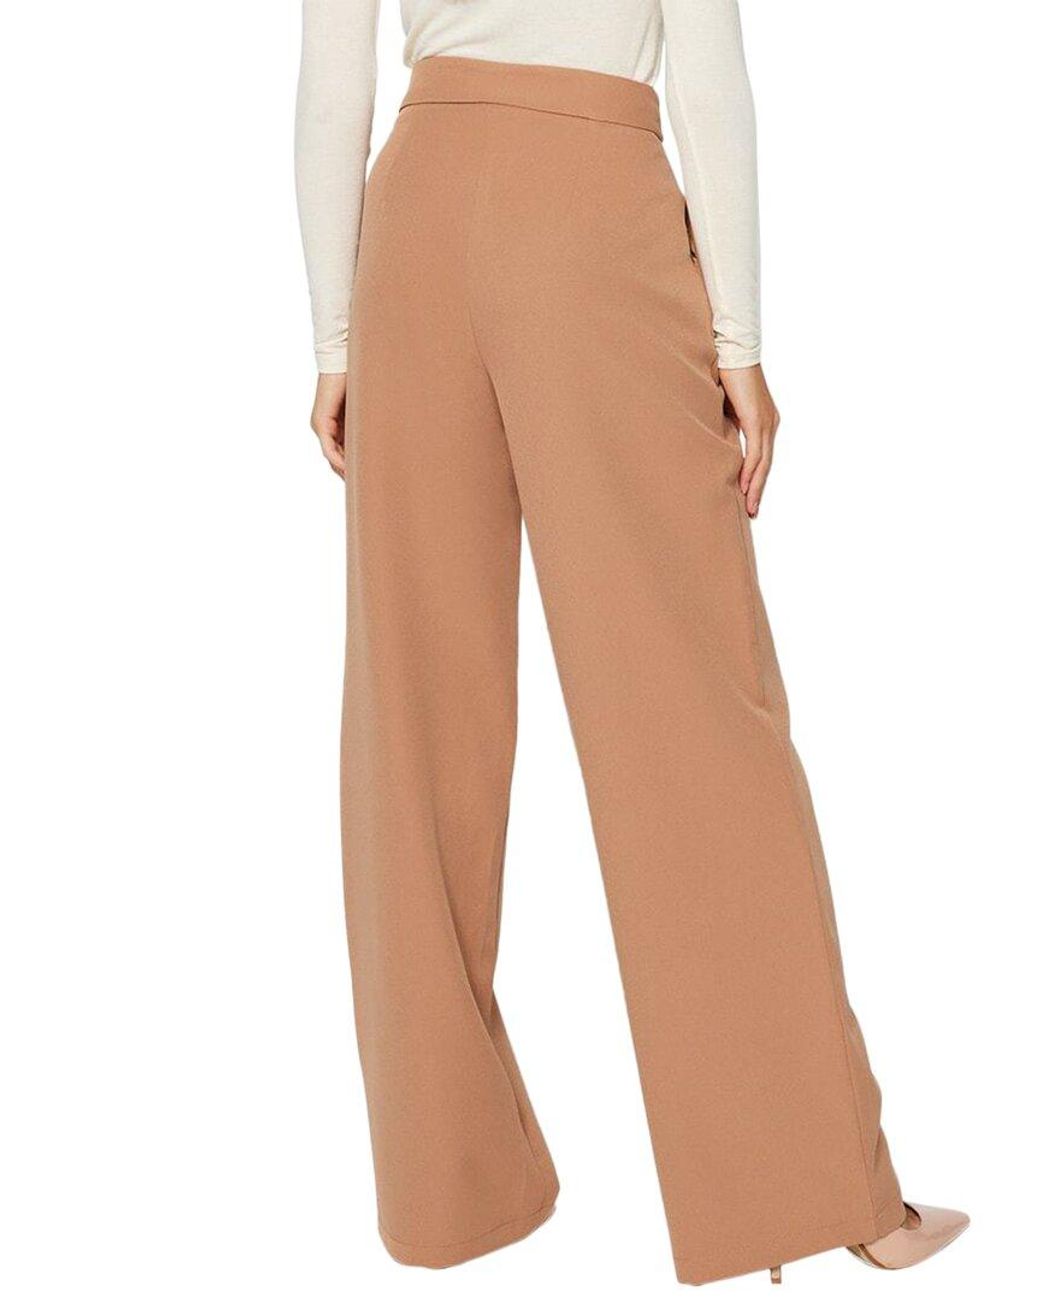 Trendyol Collection Pants - Brown - Carrot pants - Trendyol